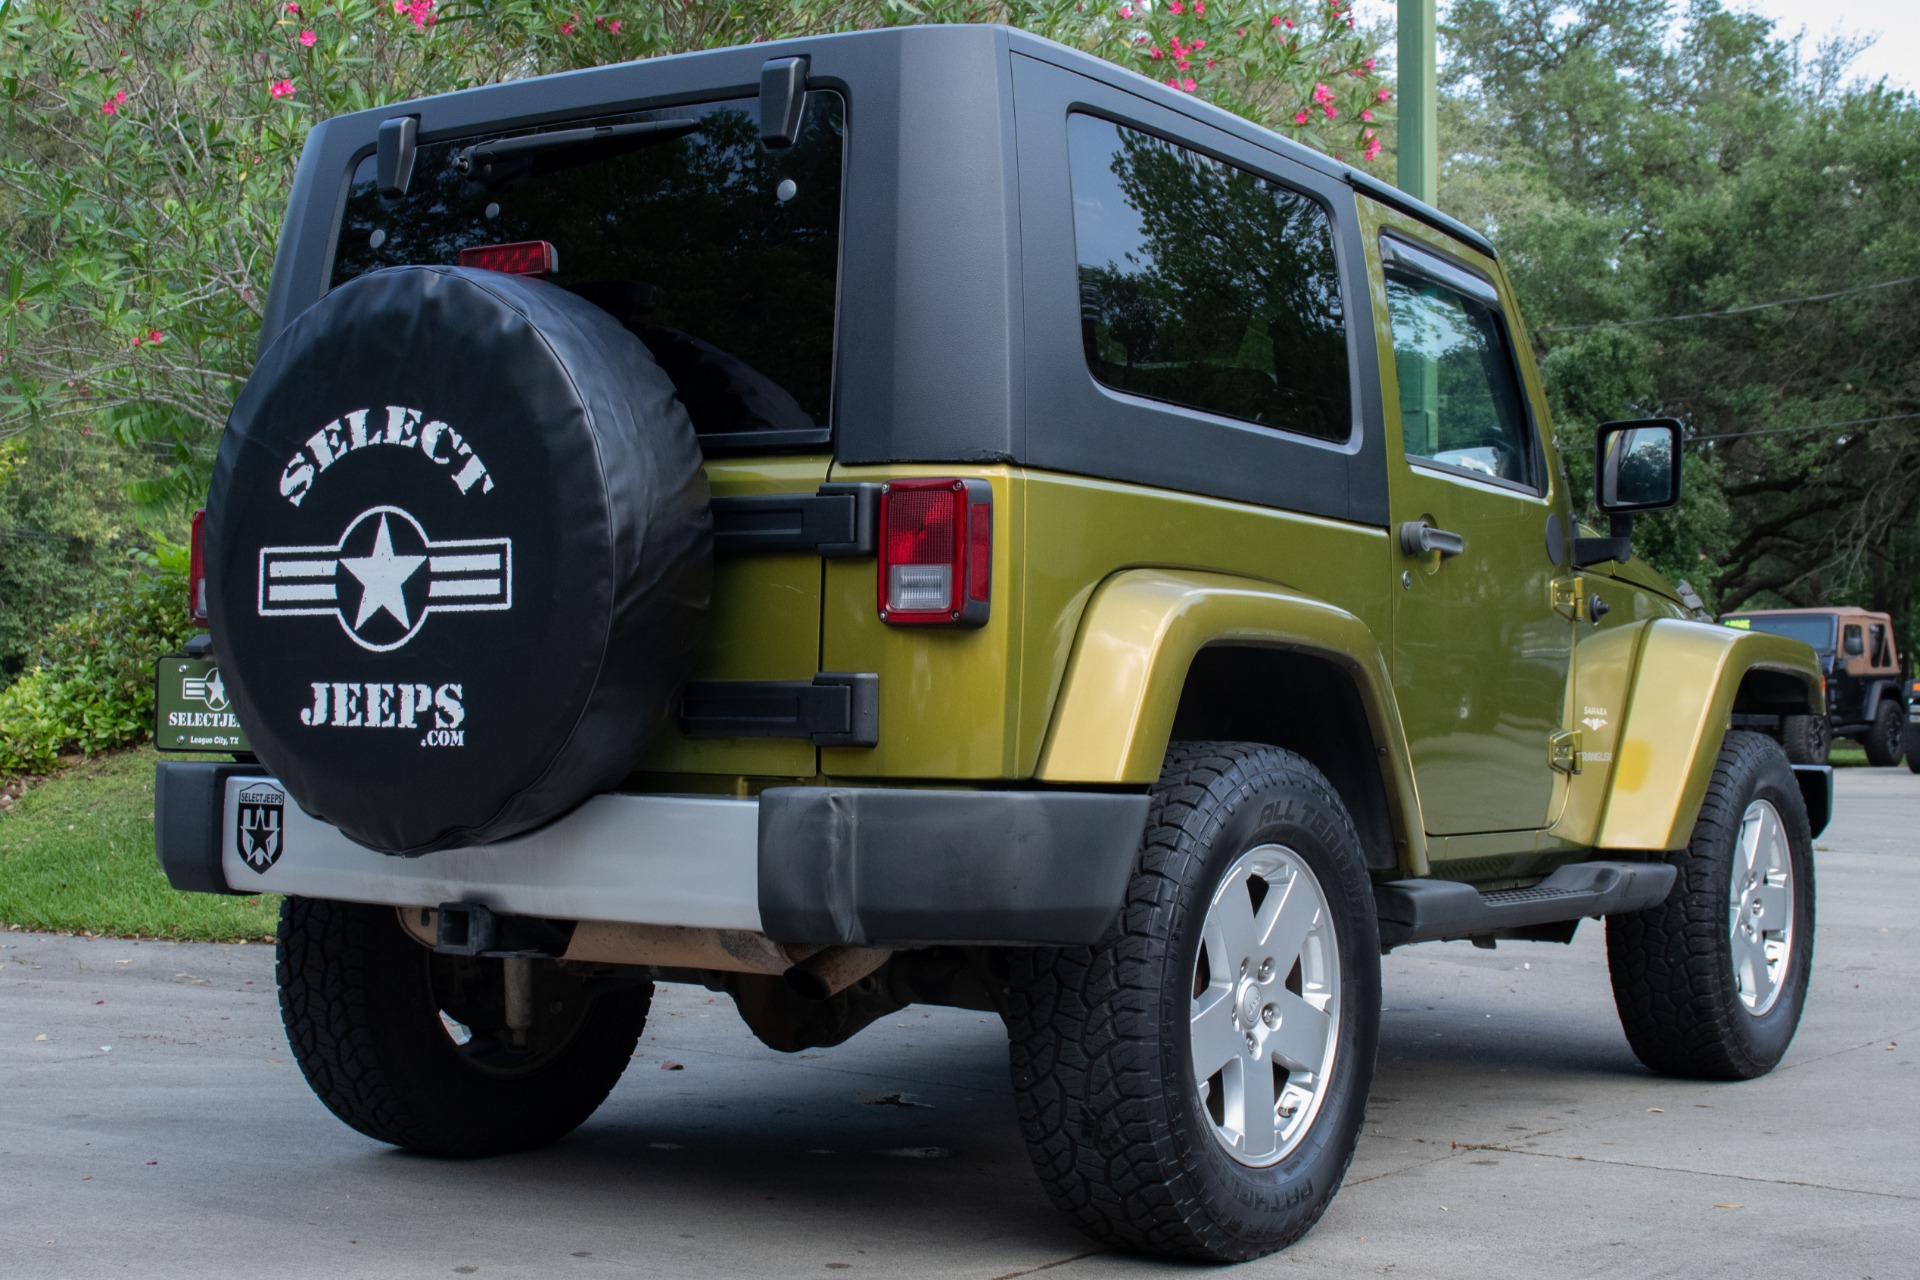 Used 2008 Jeep Wrangler Sahara For Sale ($12,995) | Select Jeeps Inc 2008 Jeep Wrangler Sahara Unlimited Towing Capacity